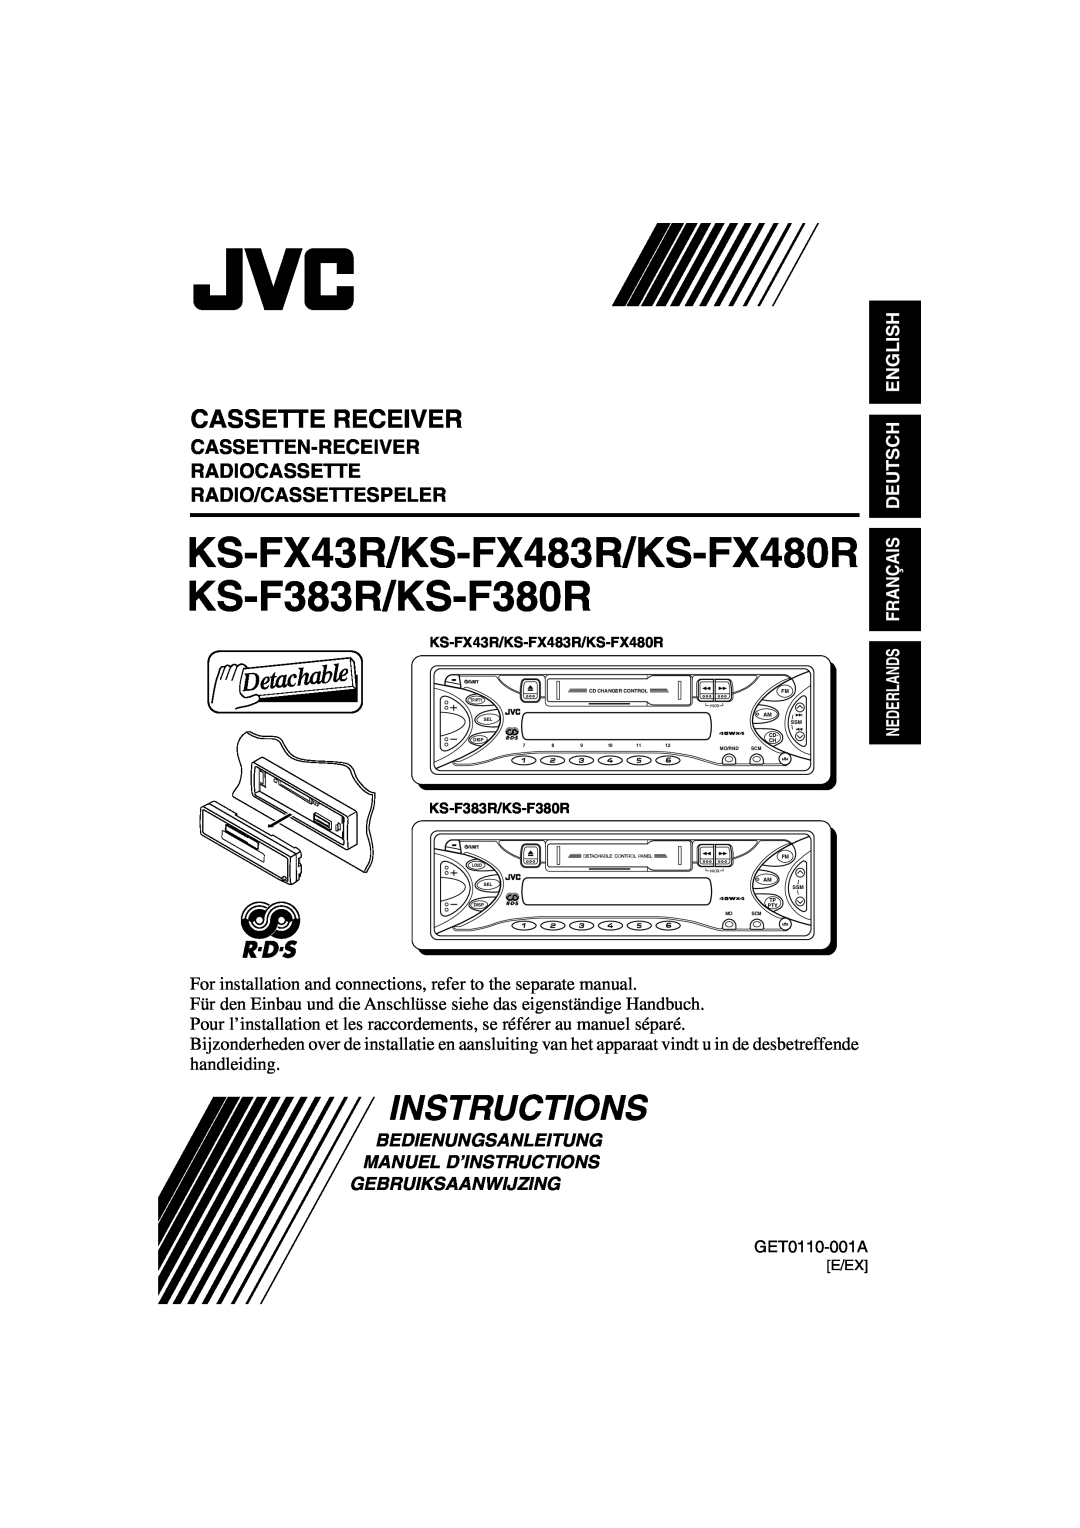 JVC KS-FX43R, KS-FX480R manual Cassette Receiver, Cassetten-Receiver Radiocassette, Radio/Cassettespeler, Instructions 